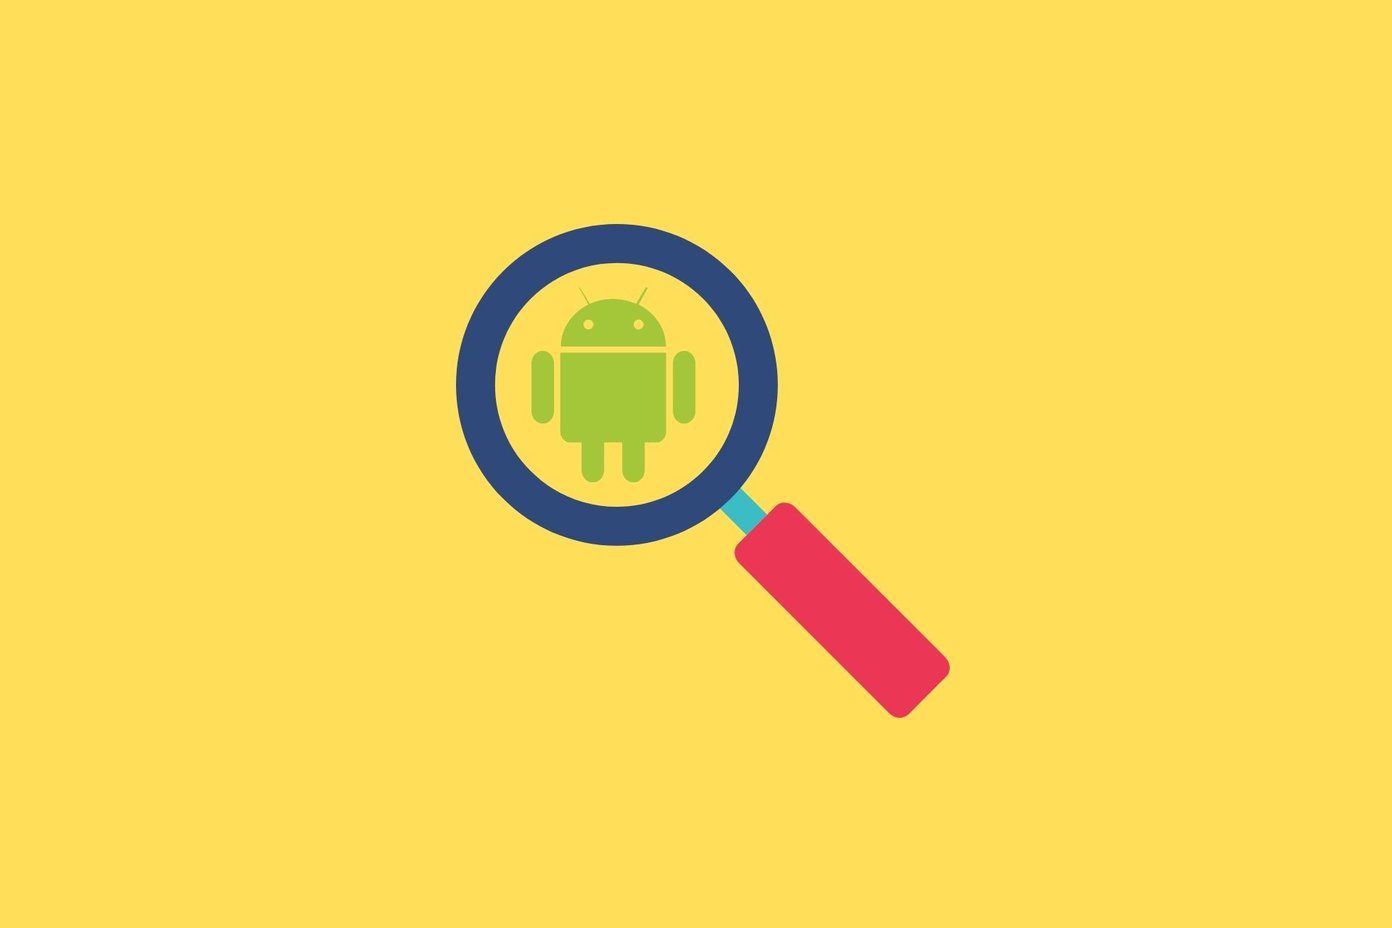 Arreglar el widget de la barra de búsqueda de Google que falta en Android